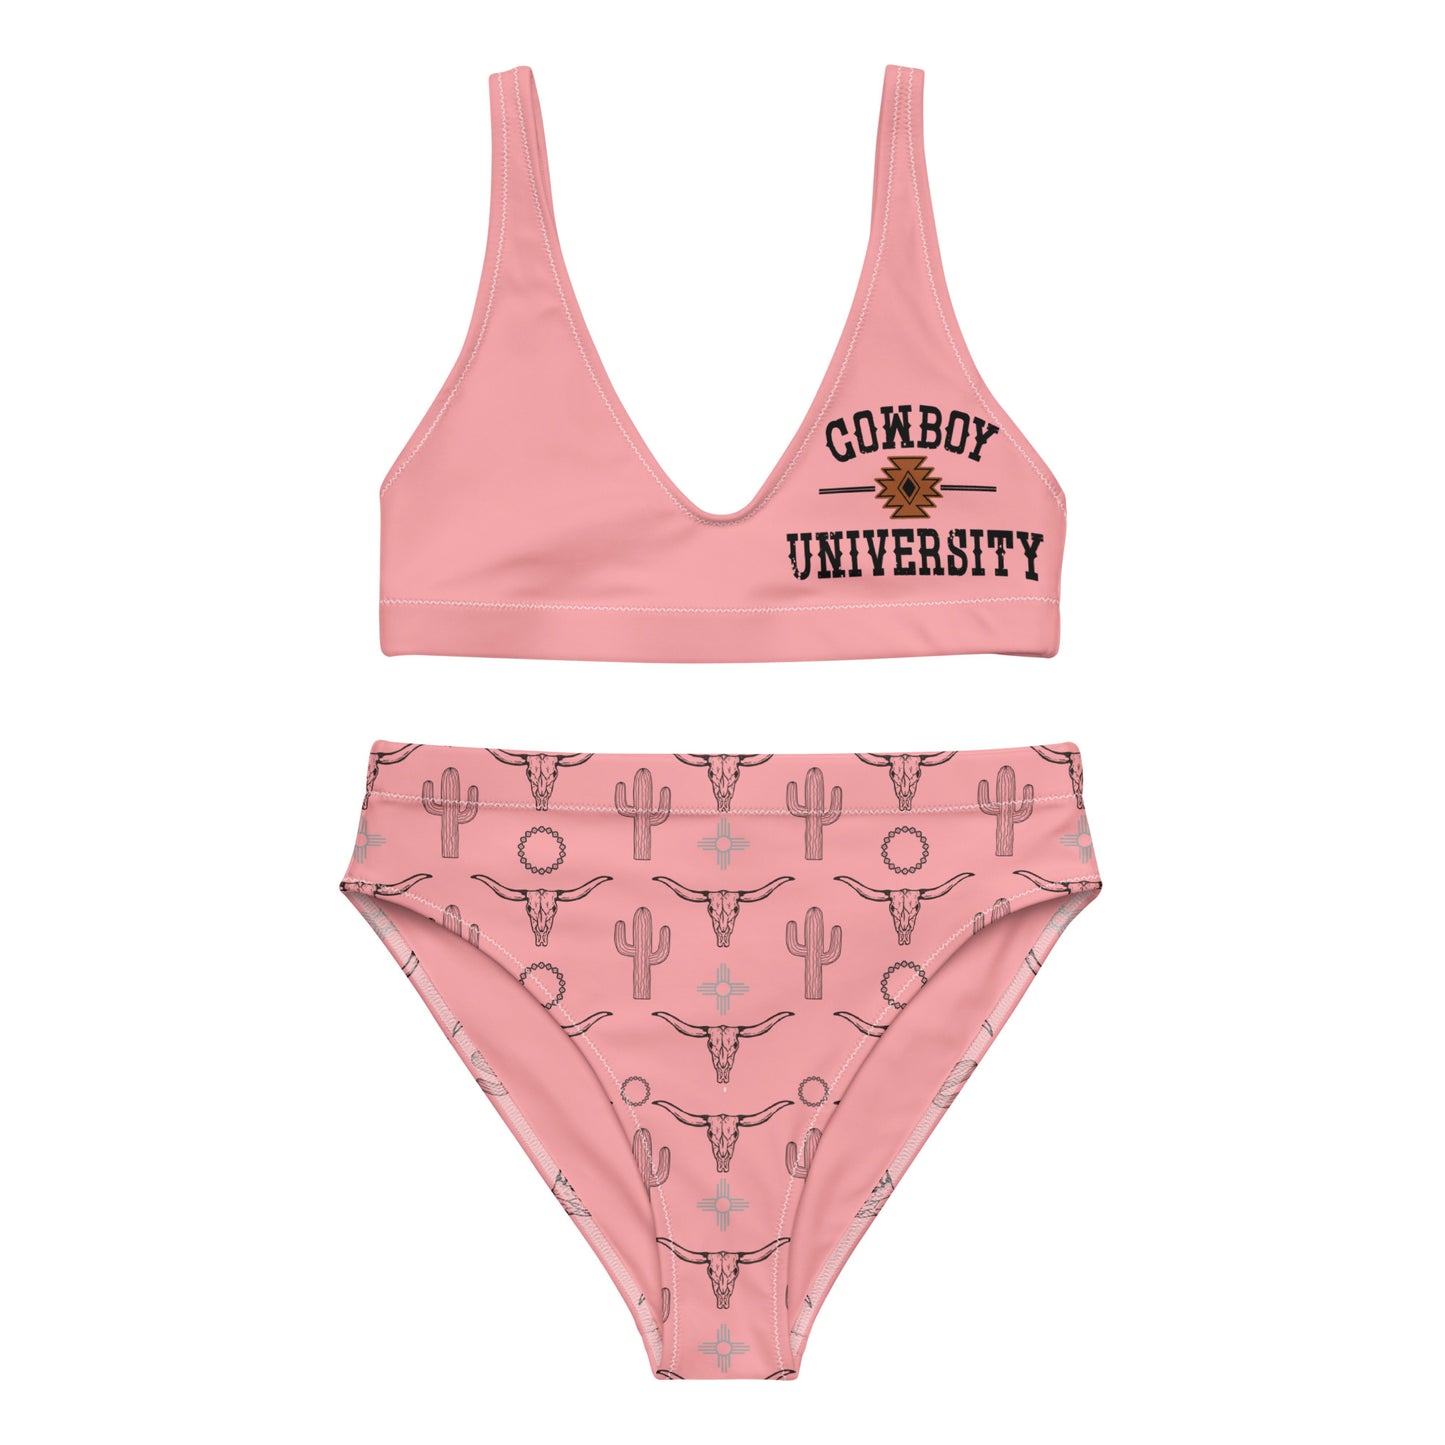 Cowboy University high-waisted bikini